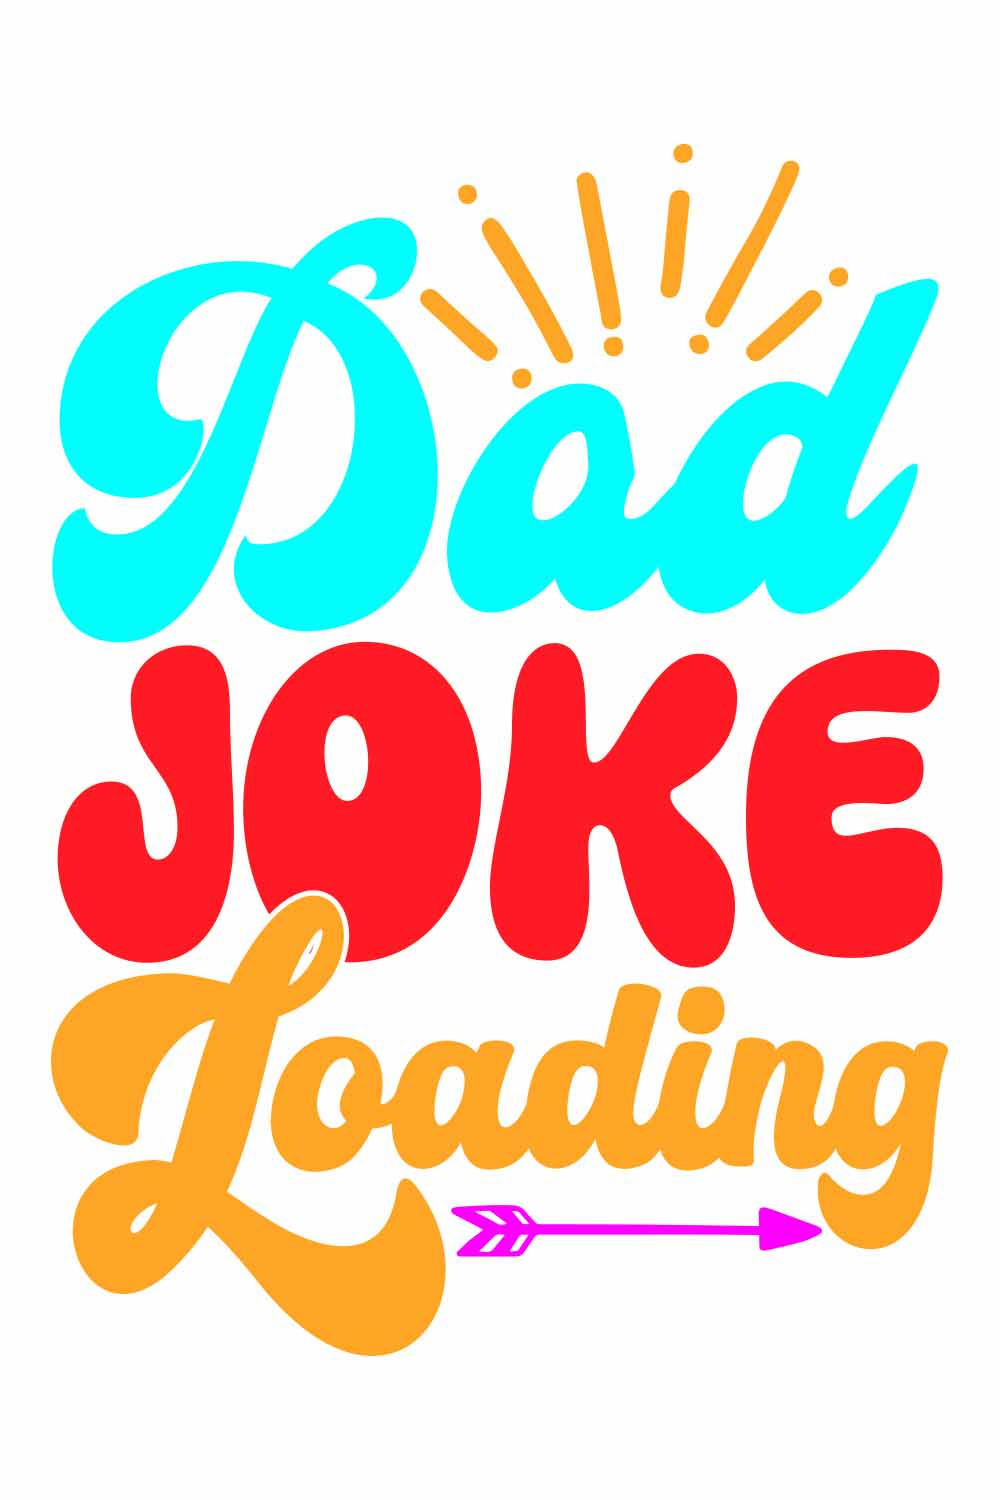 Dad Joke Loading Retro t-shirt Designs pinterest preview image.